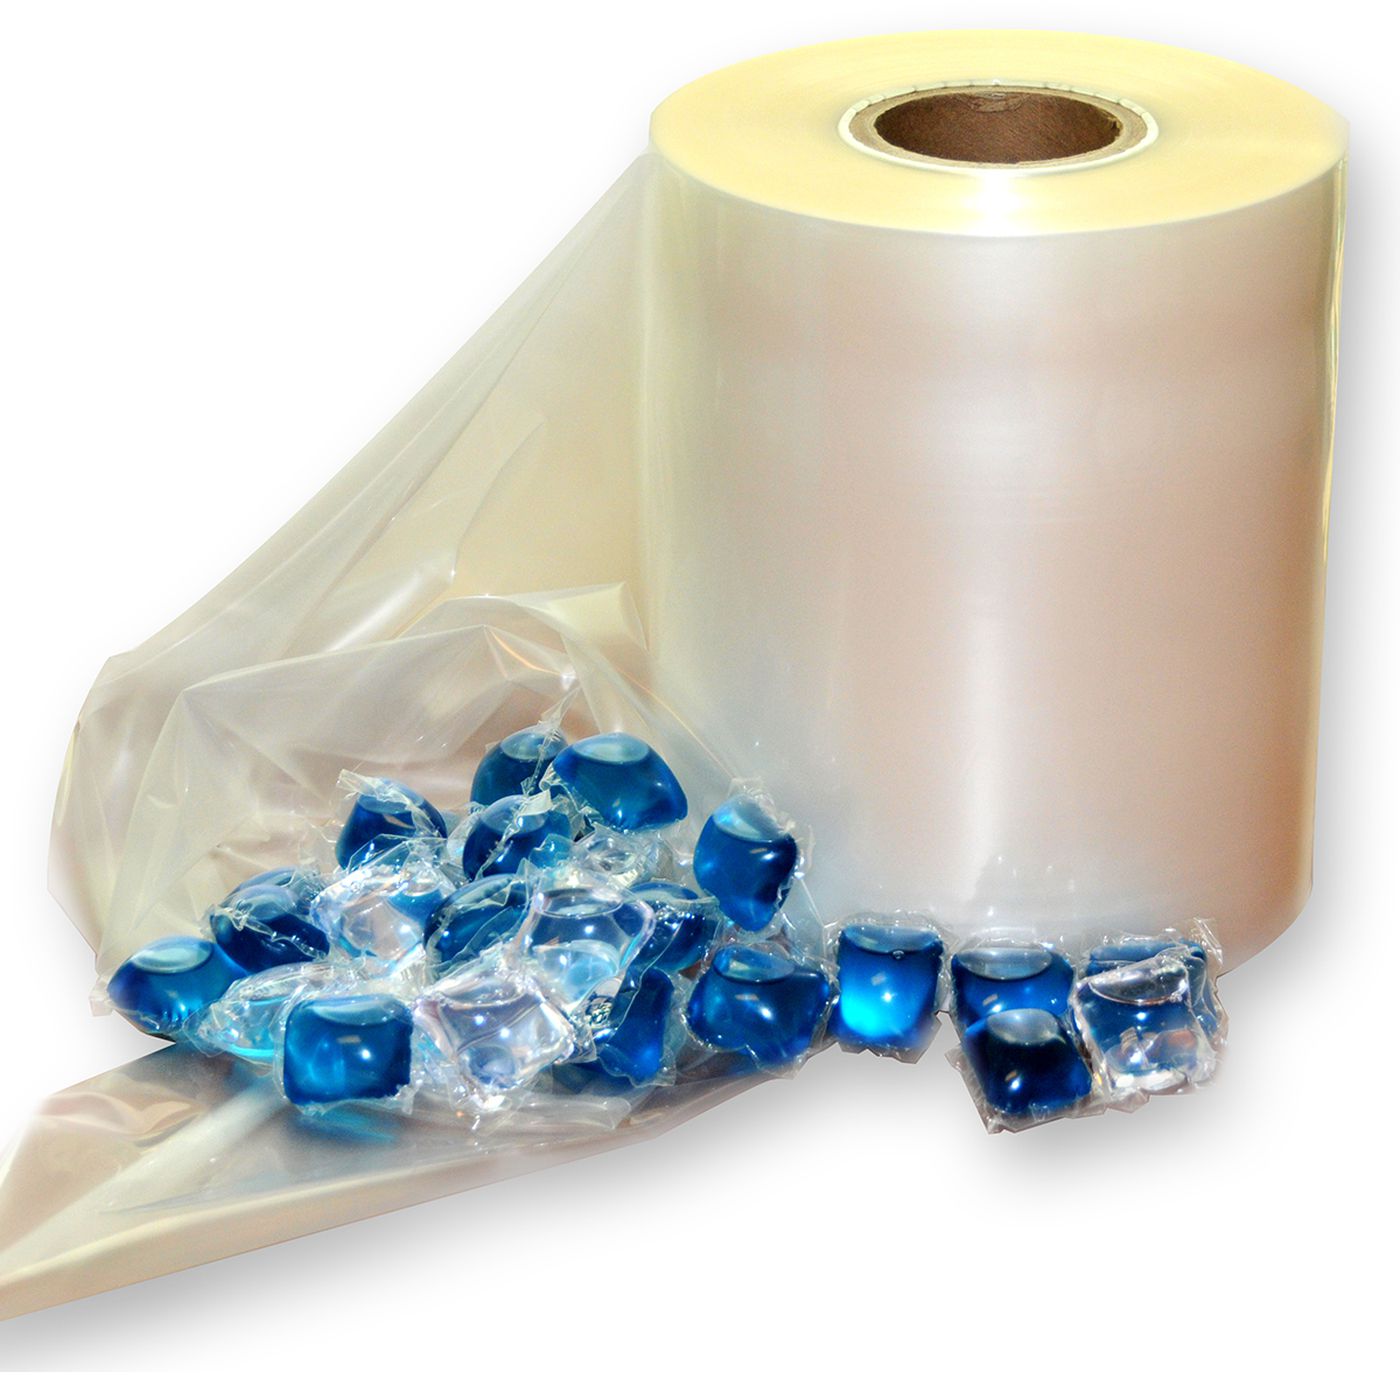 Toilet Waste Gel Powder with Odor Control in Dissolvable Pods TRAIL ESSENTIALS Porta-Pods 25 Pack 